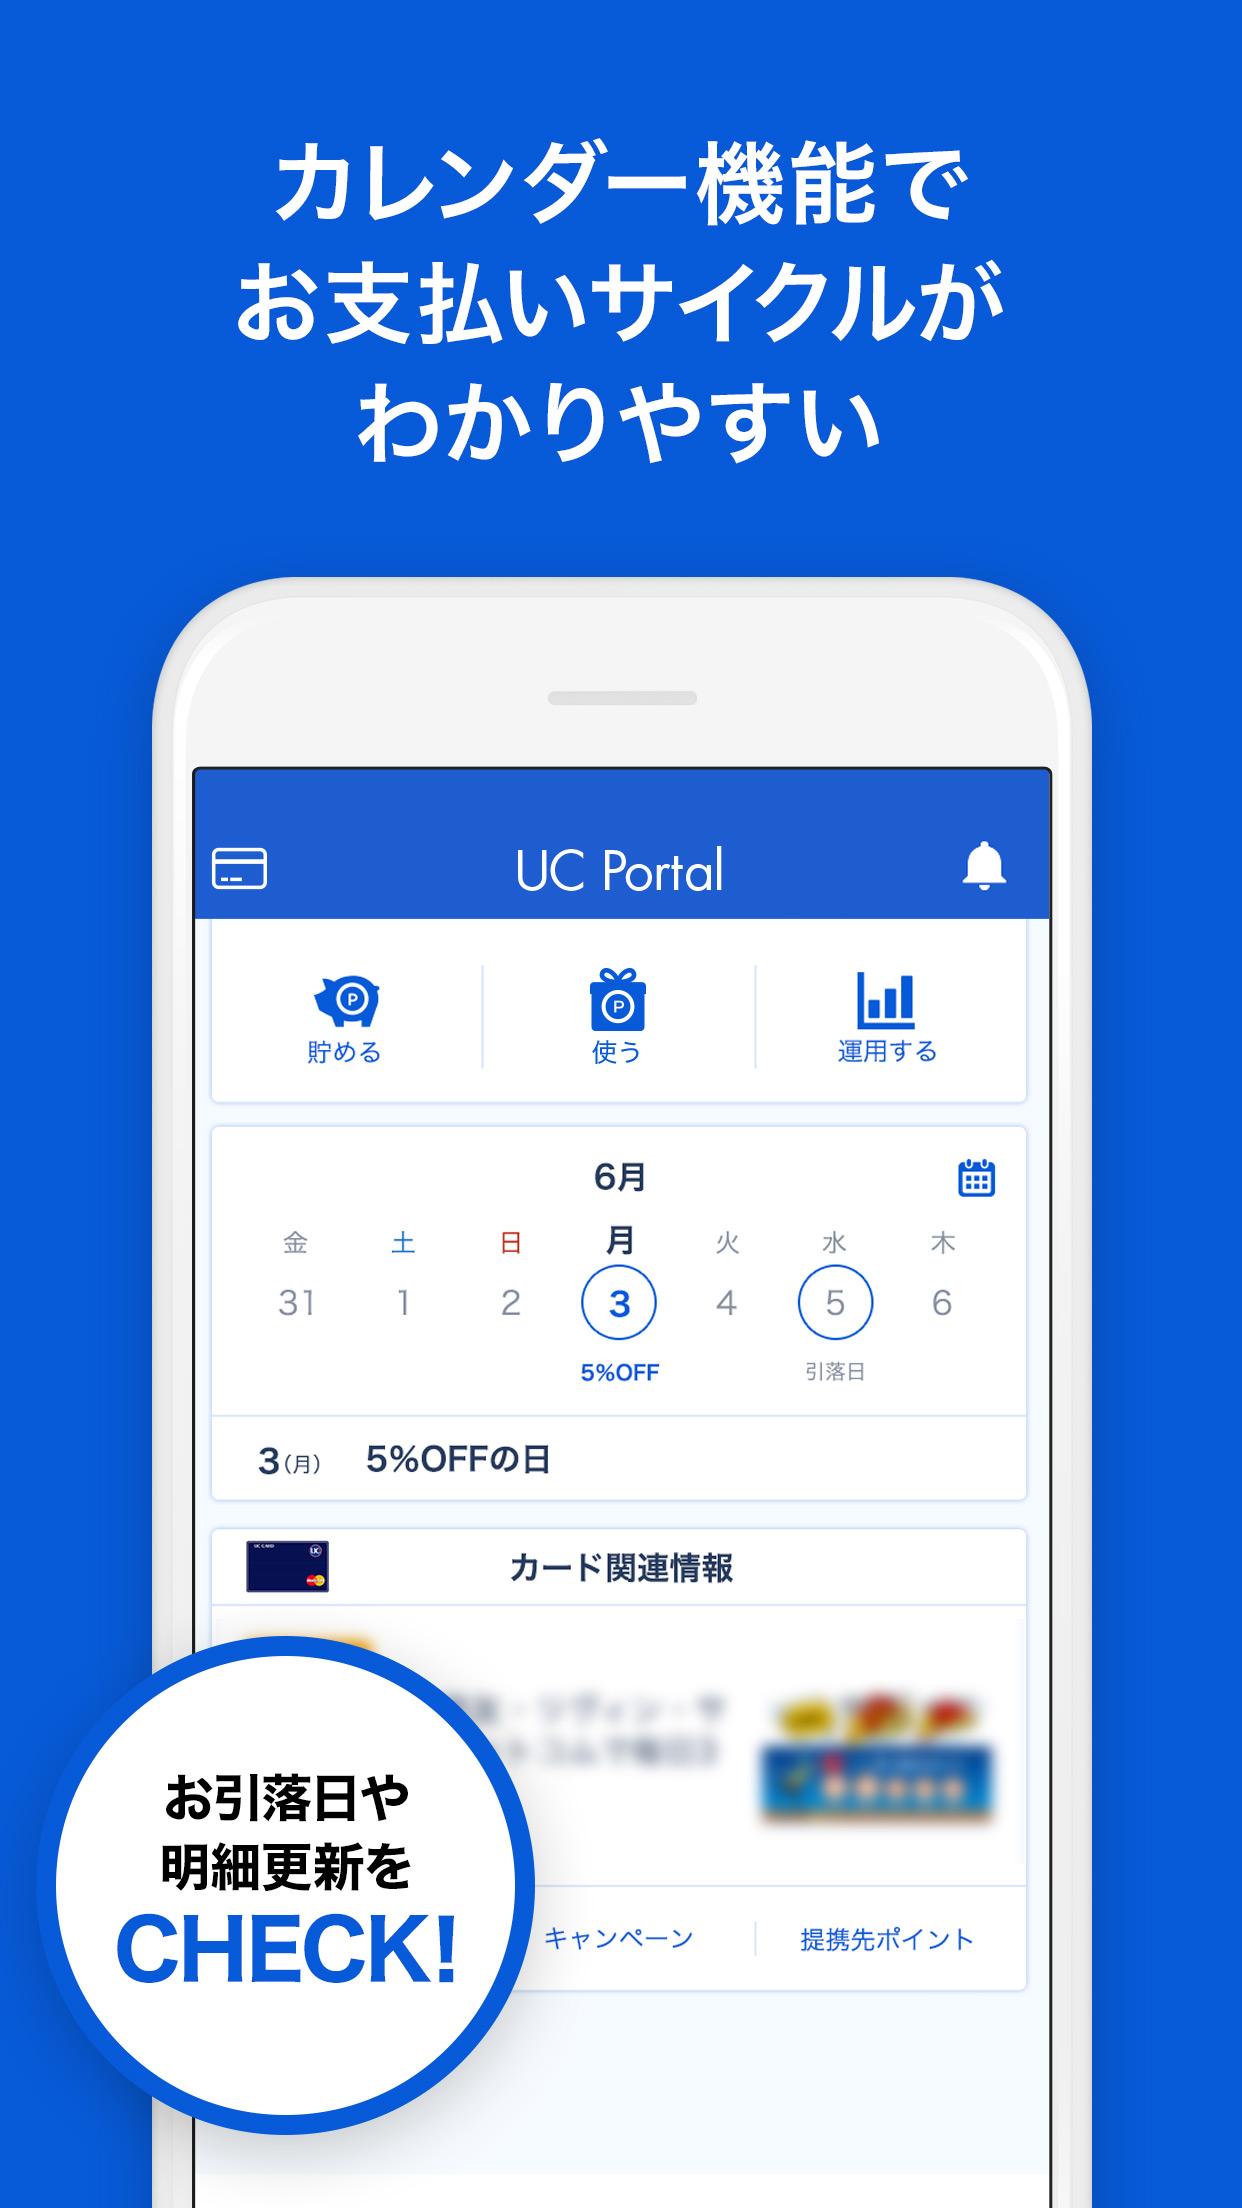 Android application UC Portal/クレジット管理 screenshort